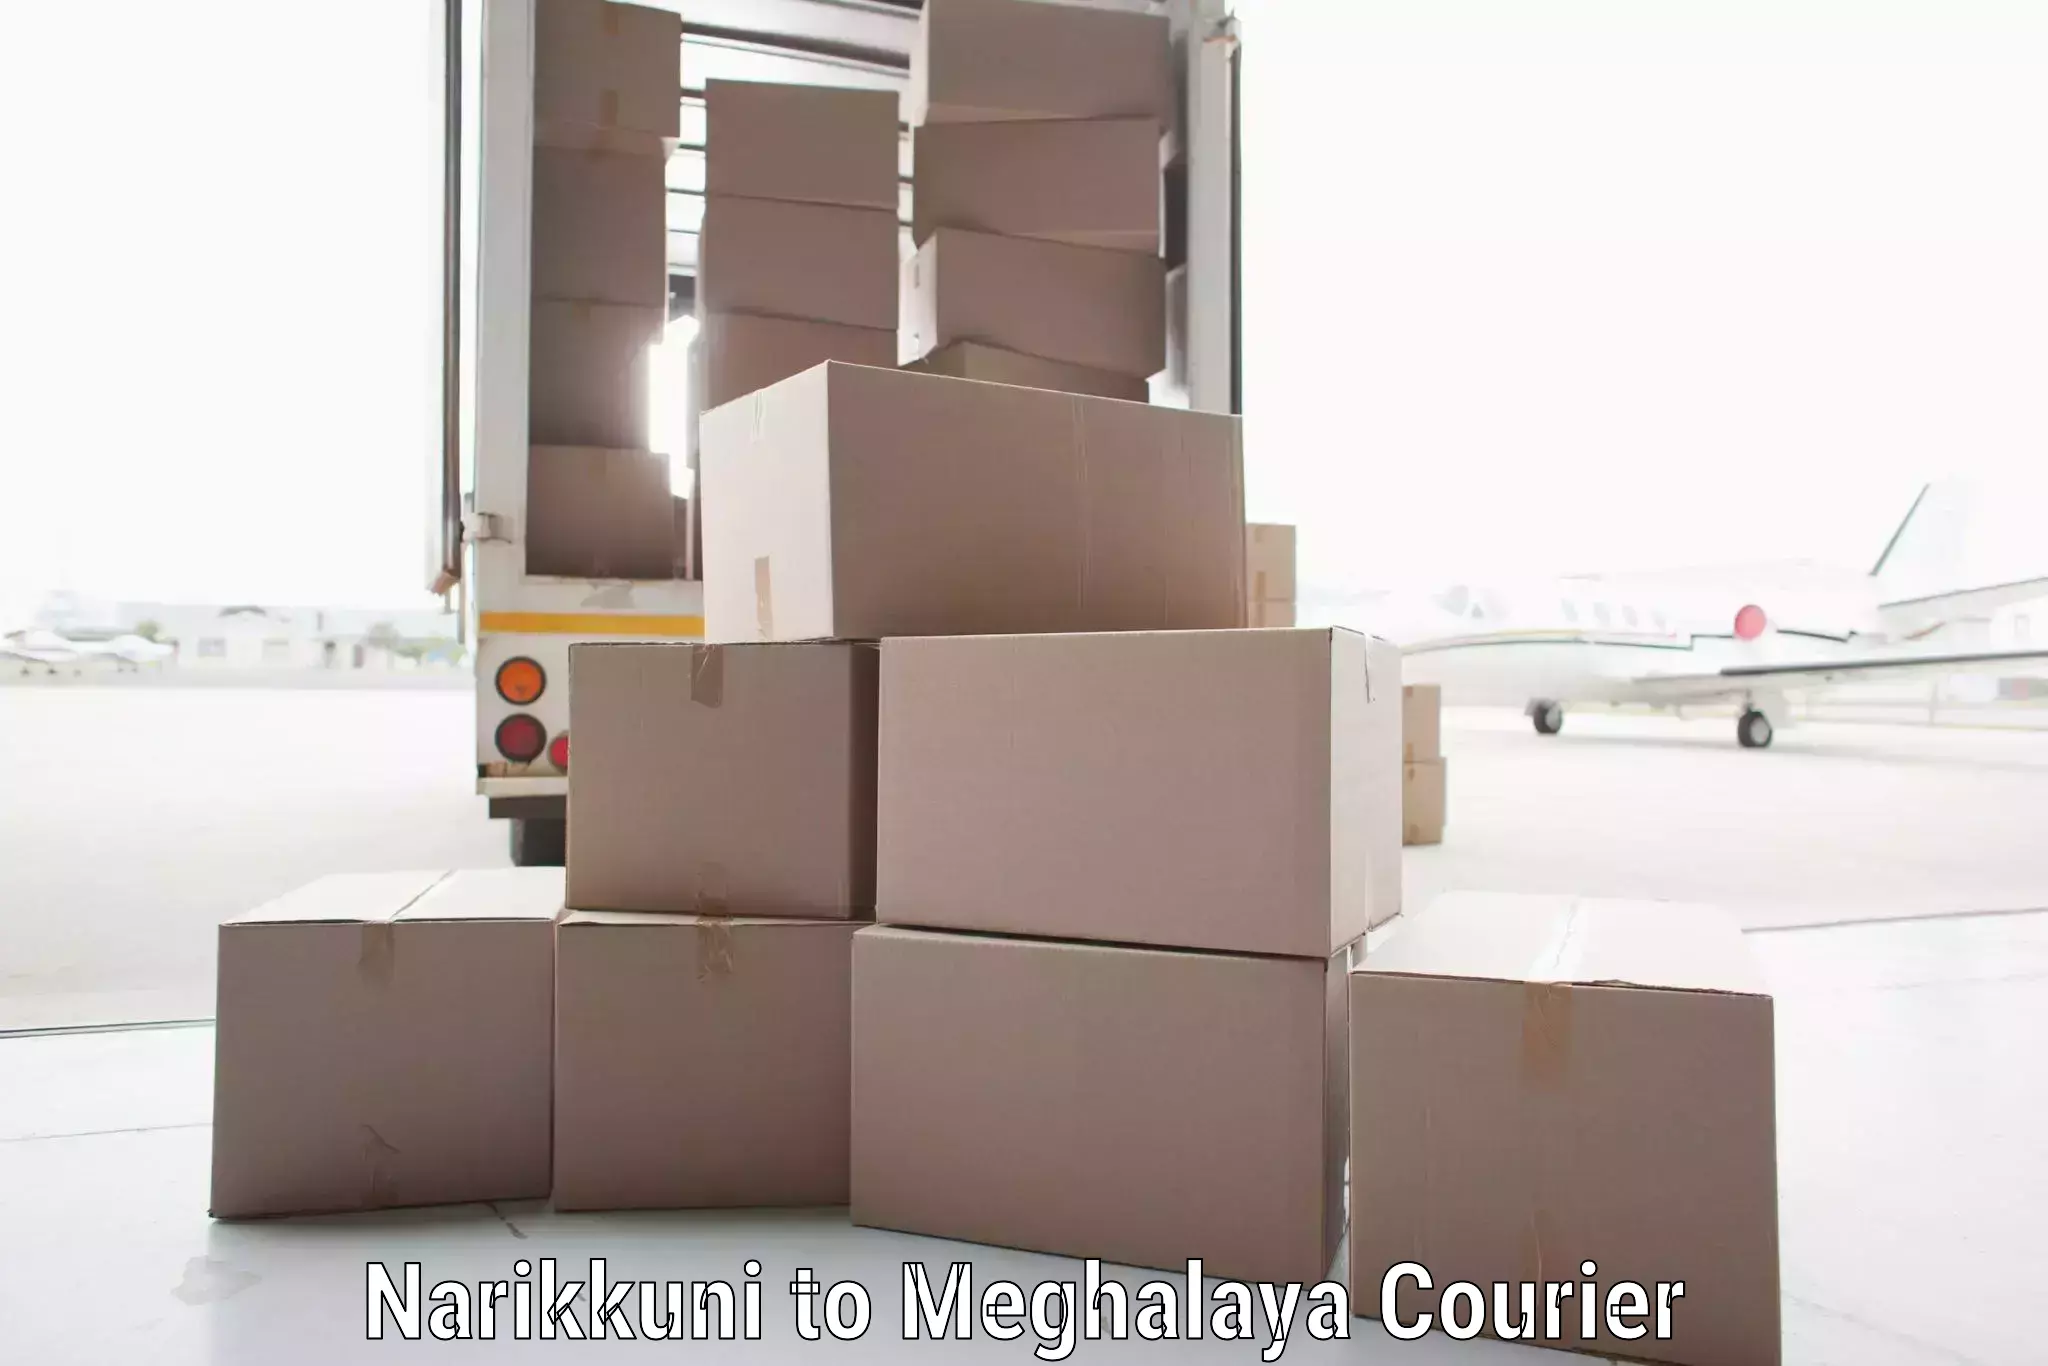 Nationwide parcel services Narikkuni to Shillong